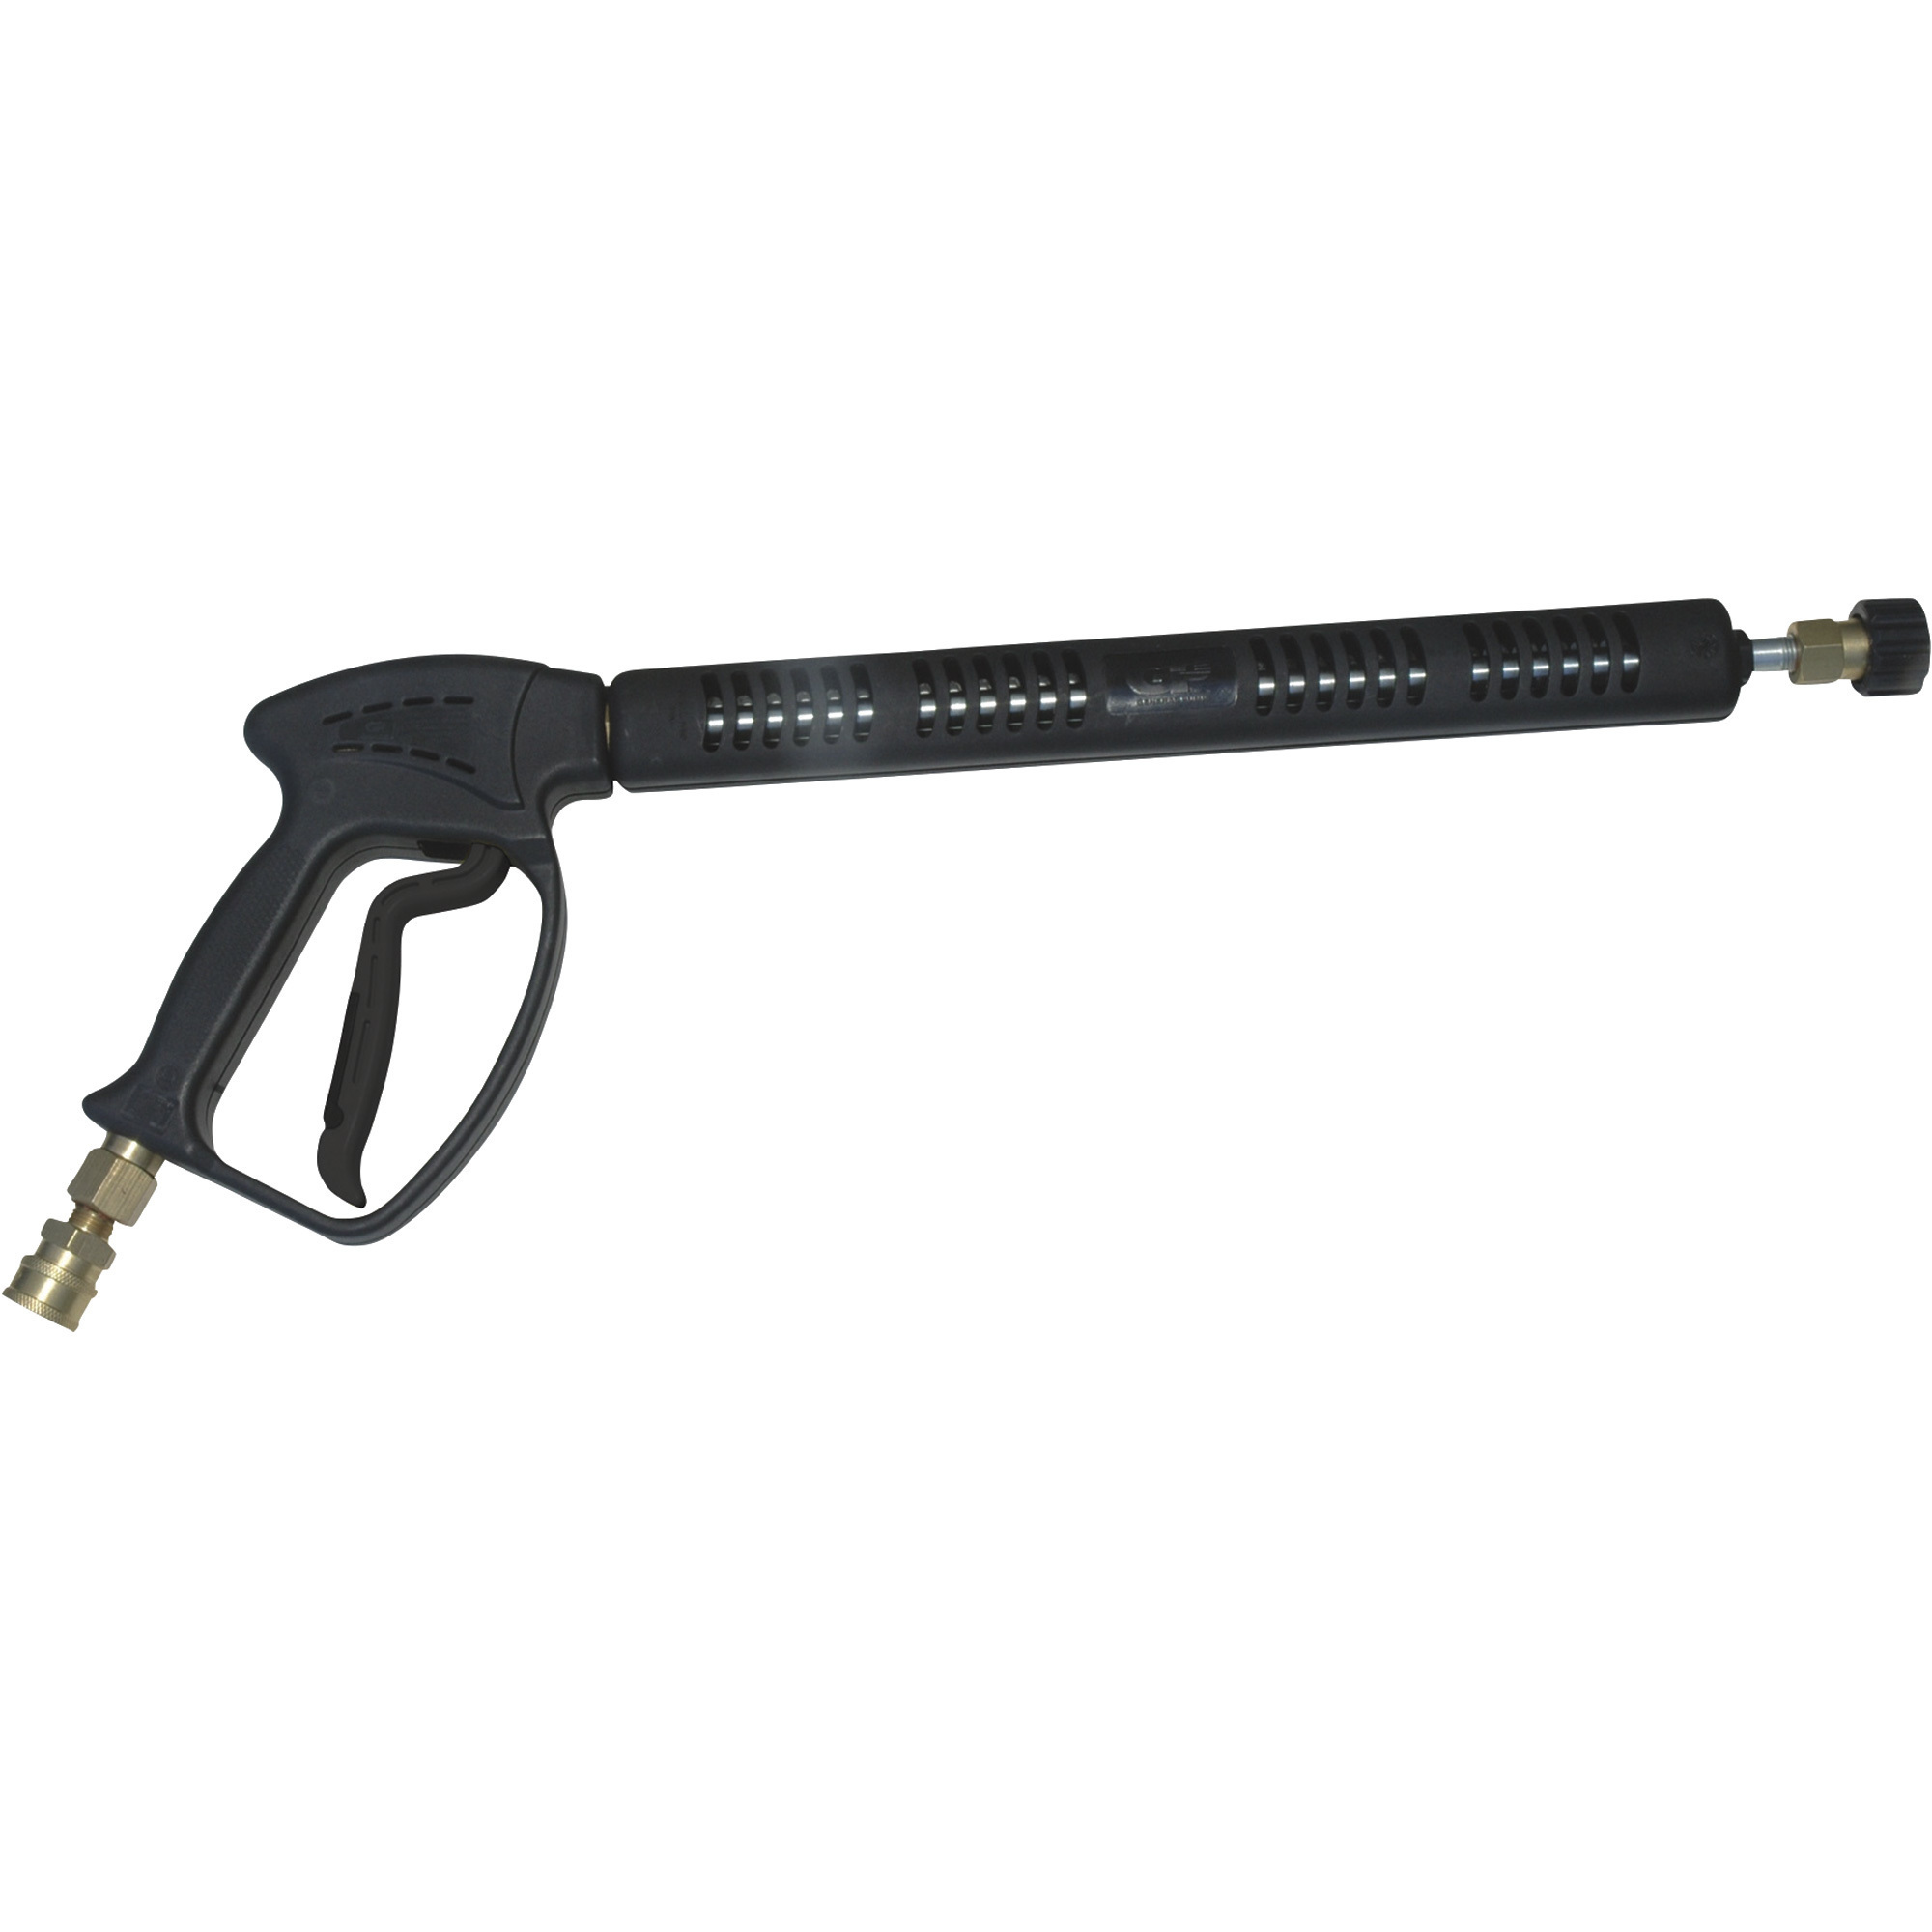 NorthStar Pressure Washer Trigger Spray Gun/Lance Combo â 5000 PSI, 10.5 GPM, Model ND20001P